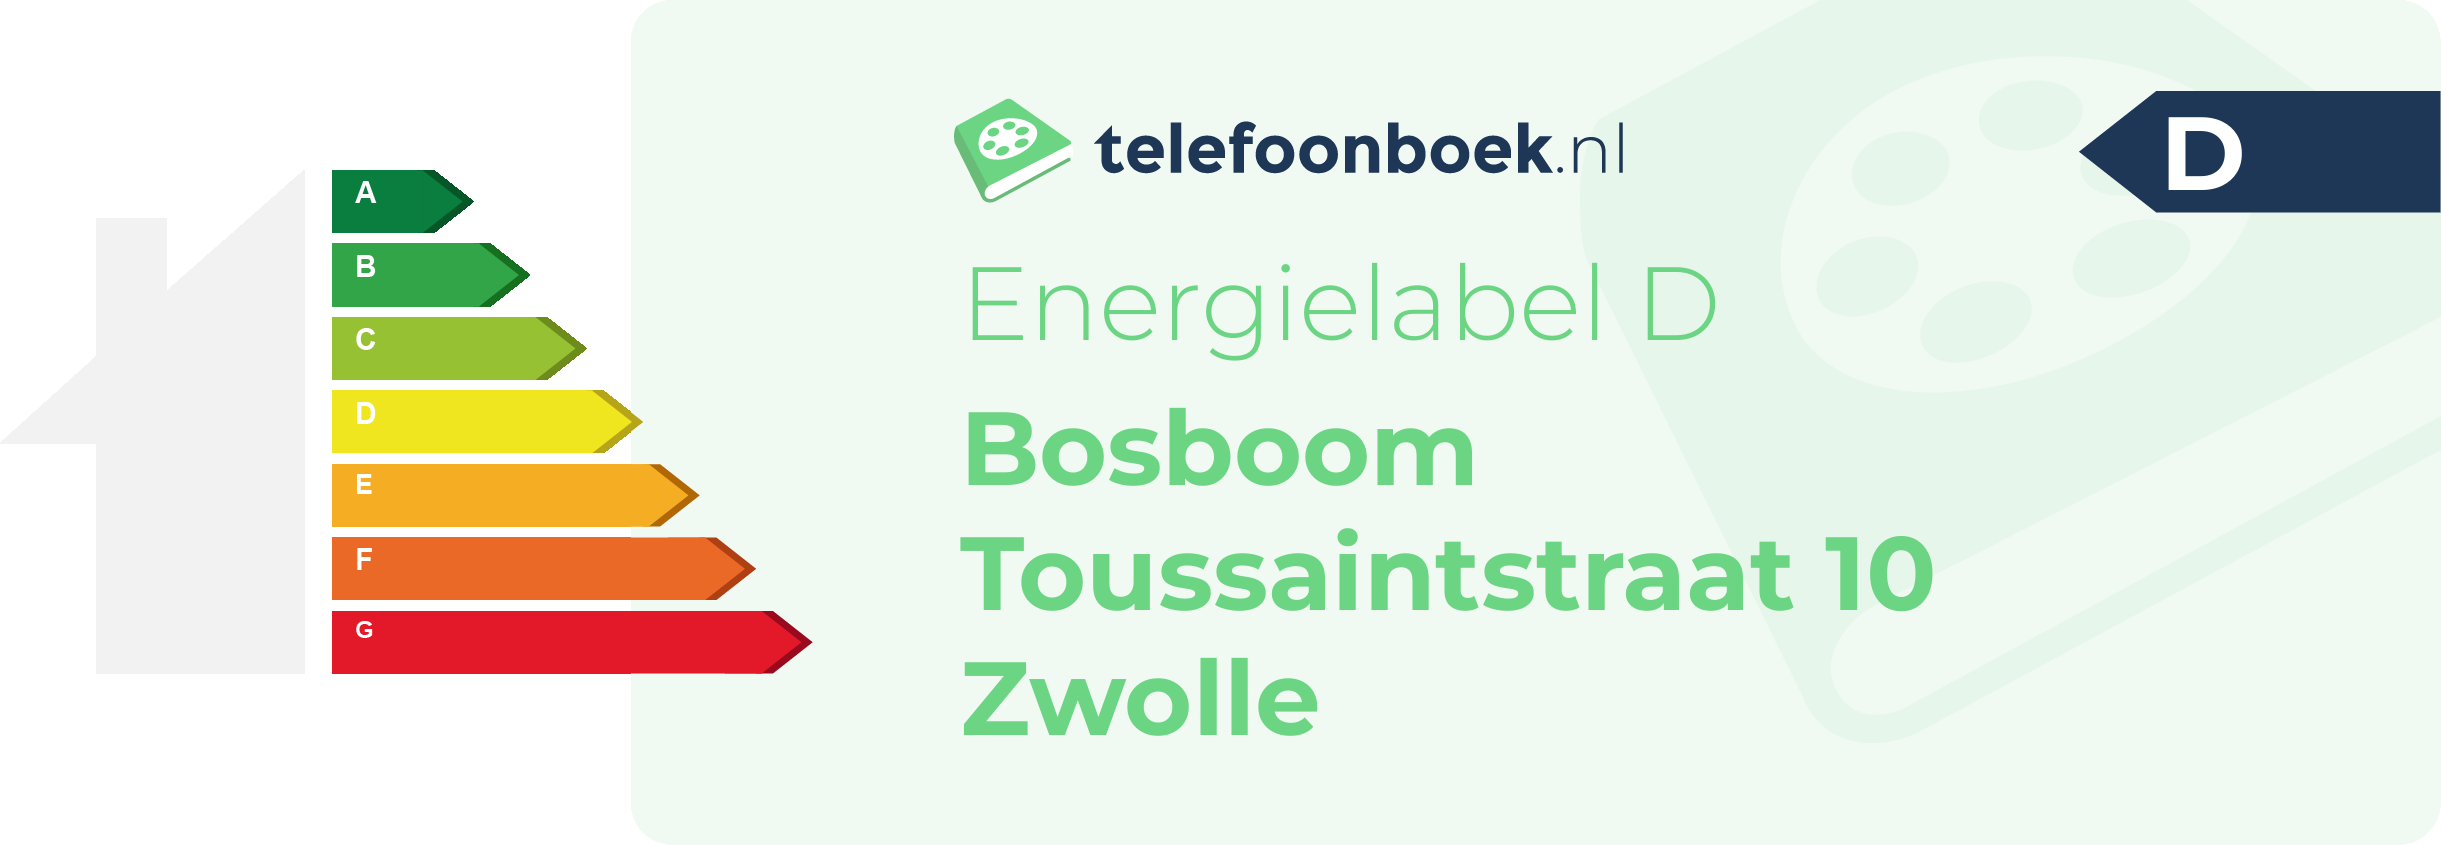 Energielabel Bosboom Toussaintstraat 10 Zwolle